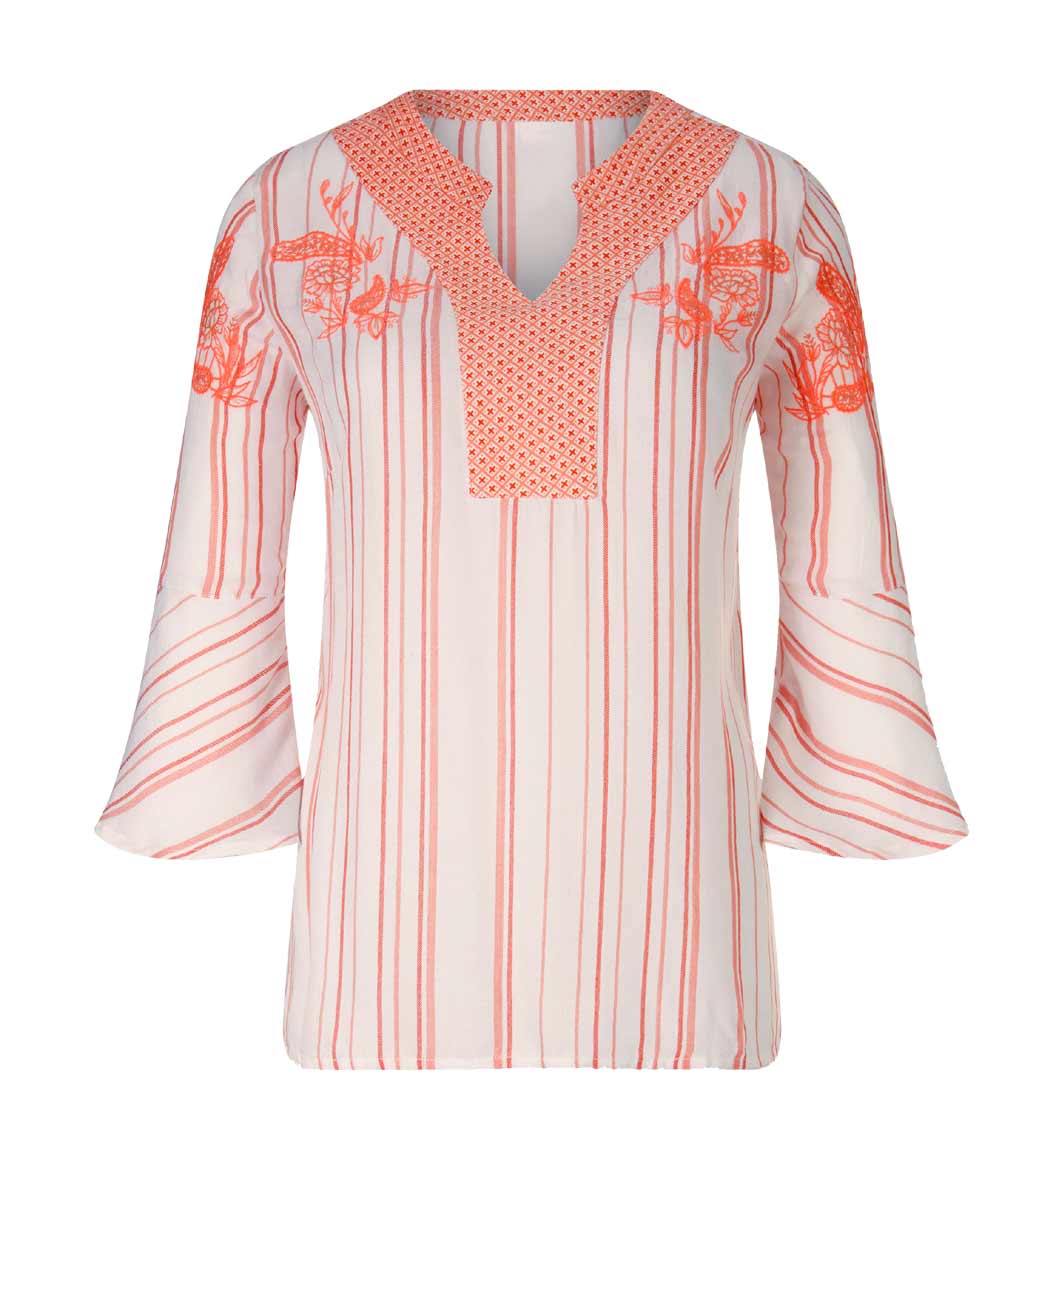 CRéATION L Damen Tunika-Bluse mit Stickerei, weiß-melone